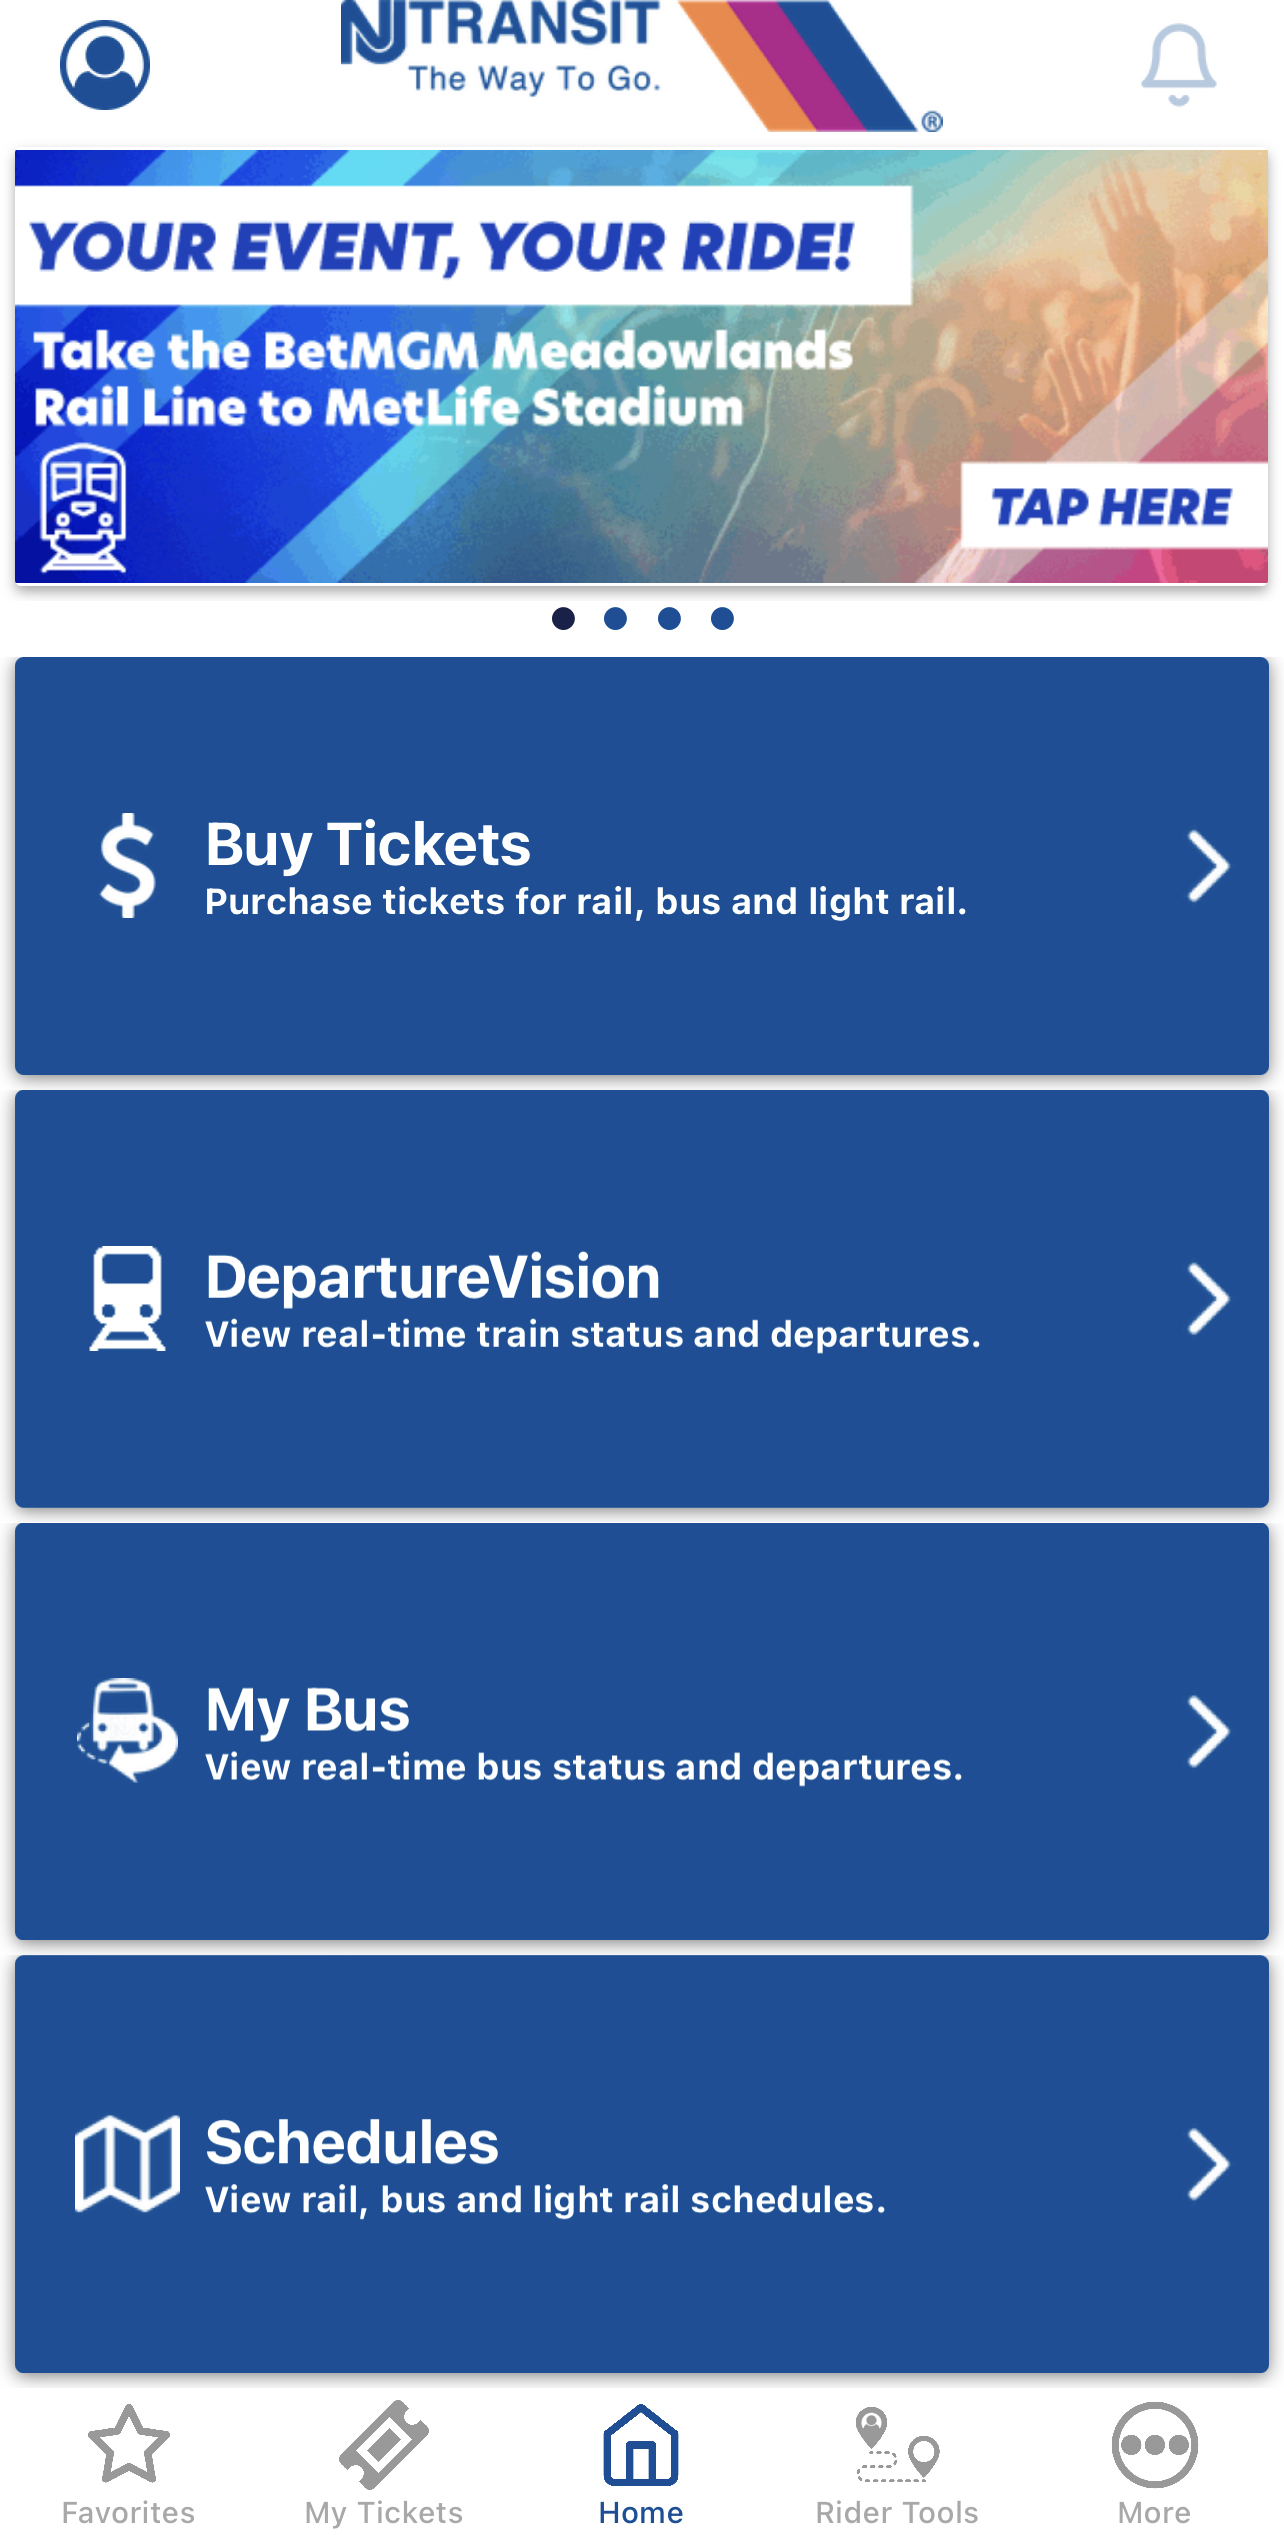 The NJ Transit app interface.